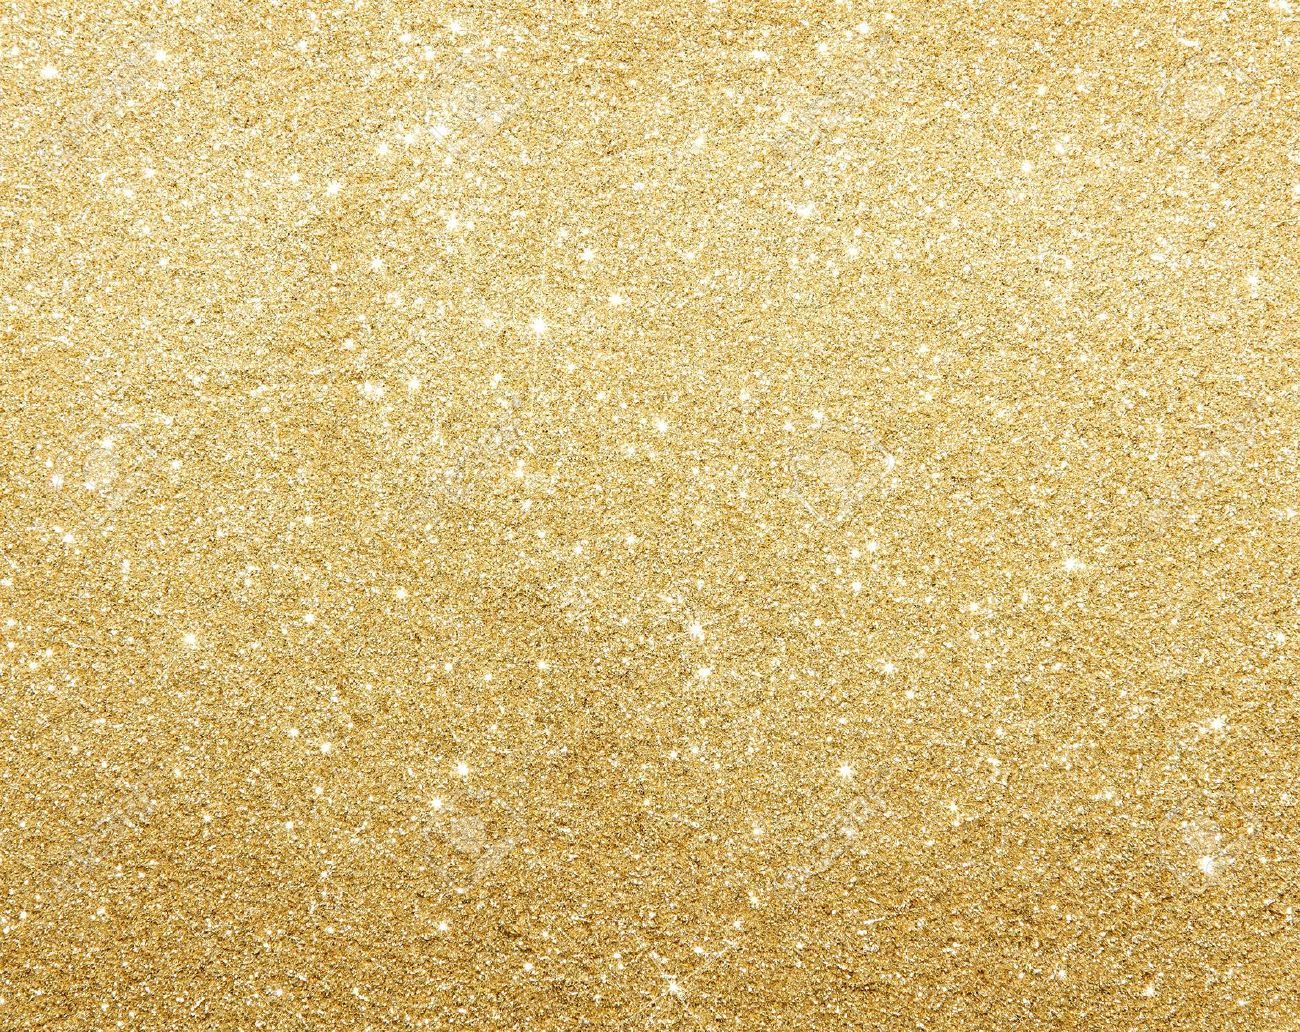 Gold Glitter Wallpaper Glitter Gold Background